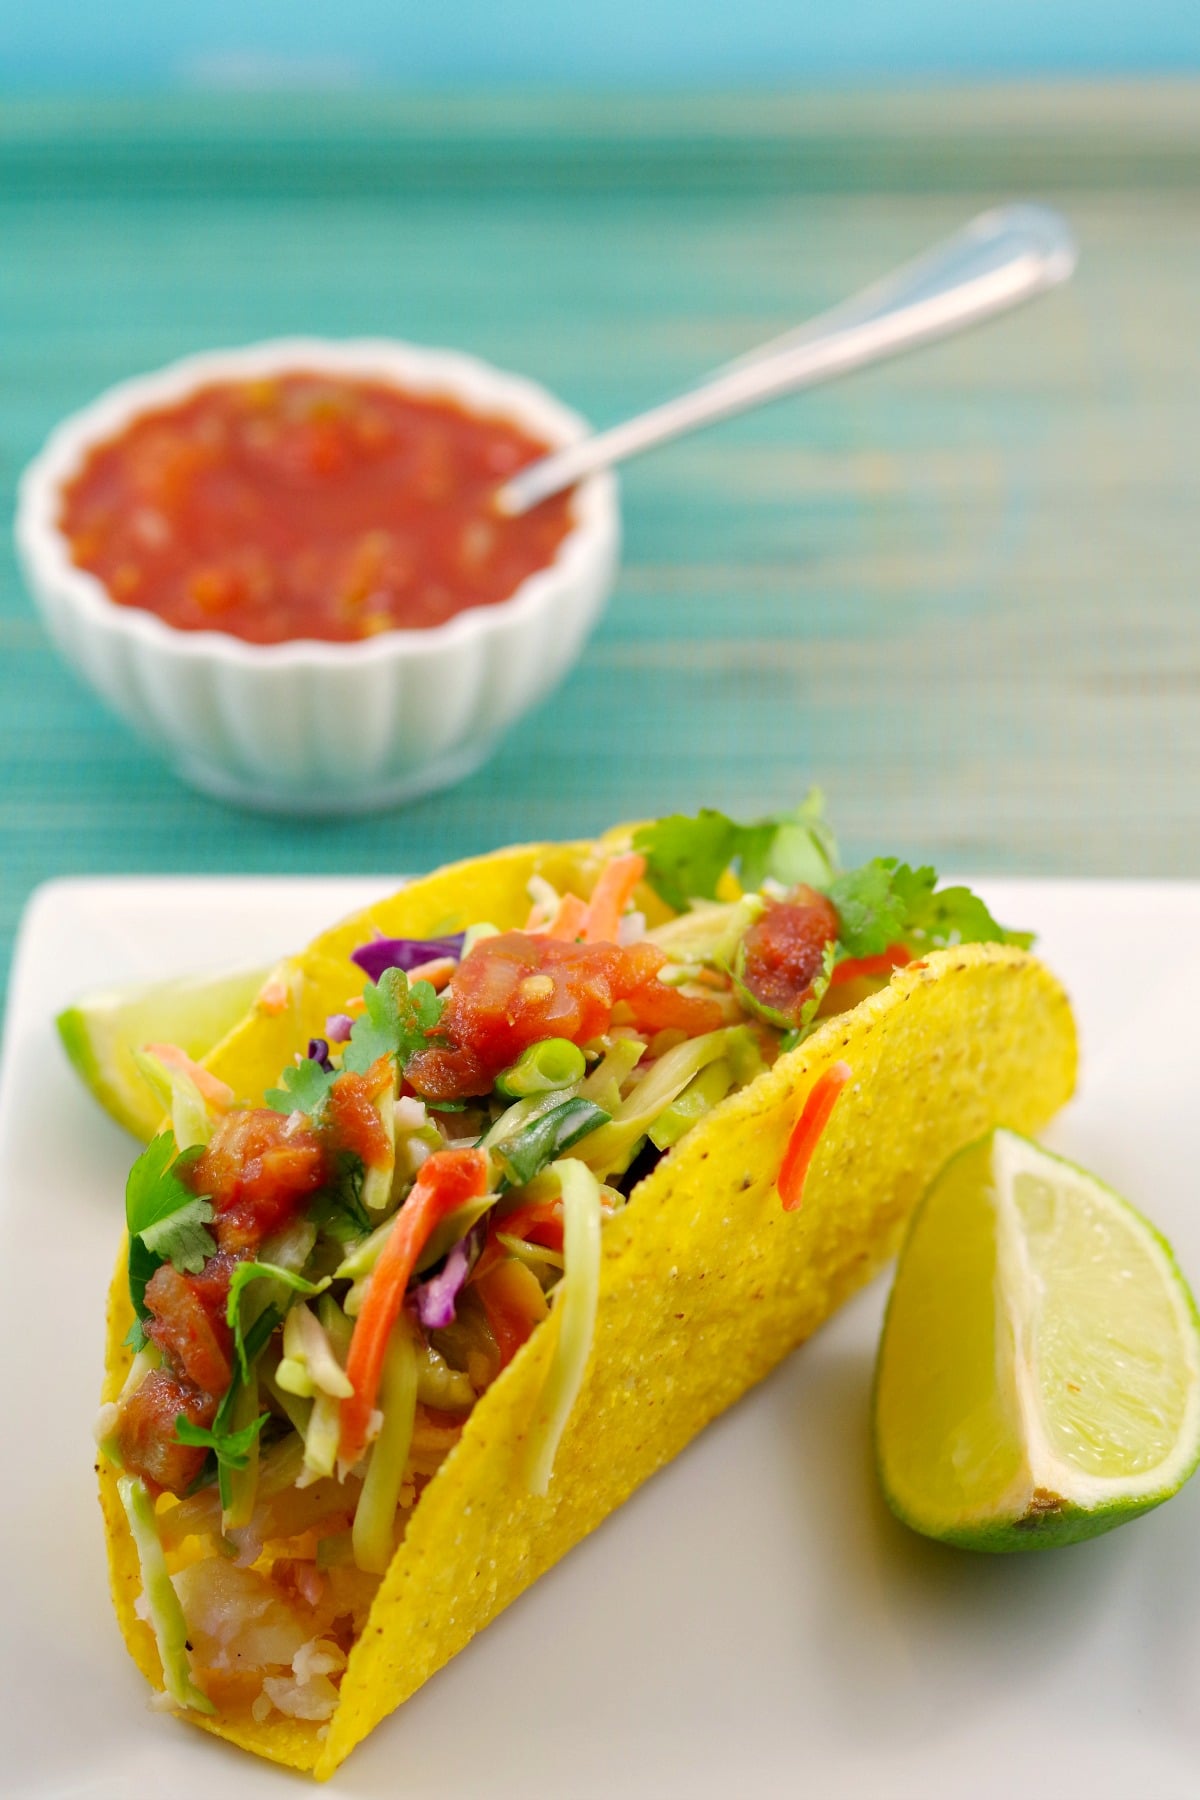 Easy fish tacos with slaw - no fishy taste